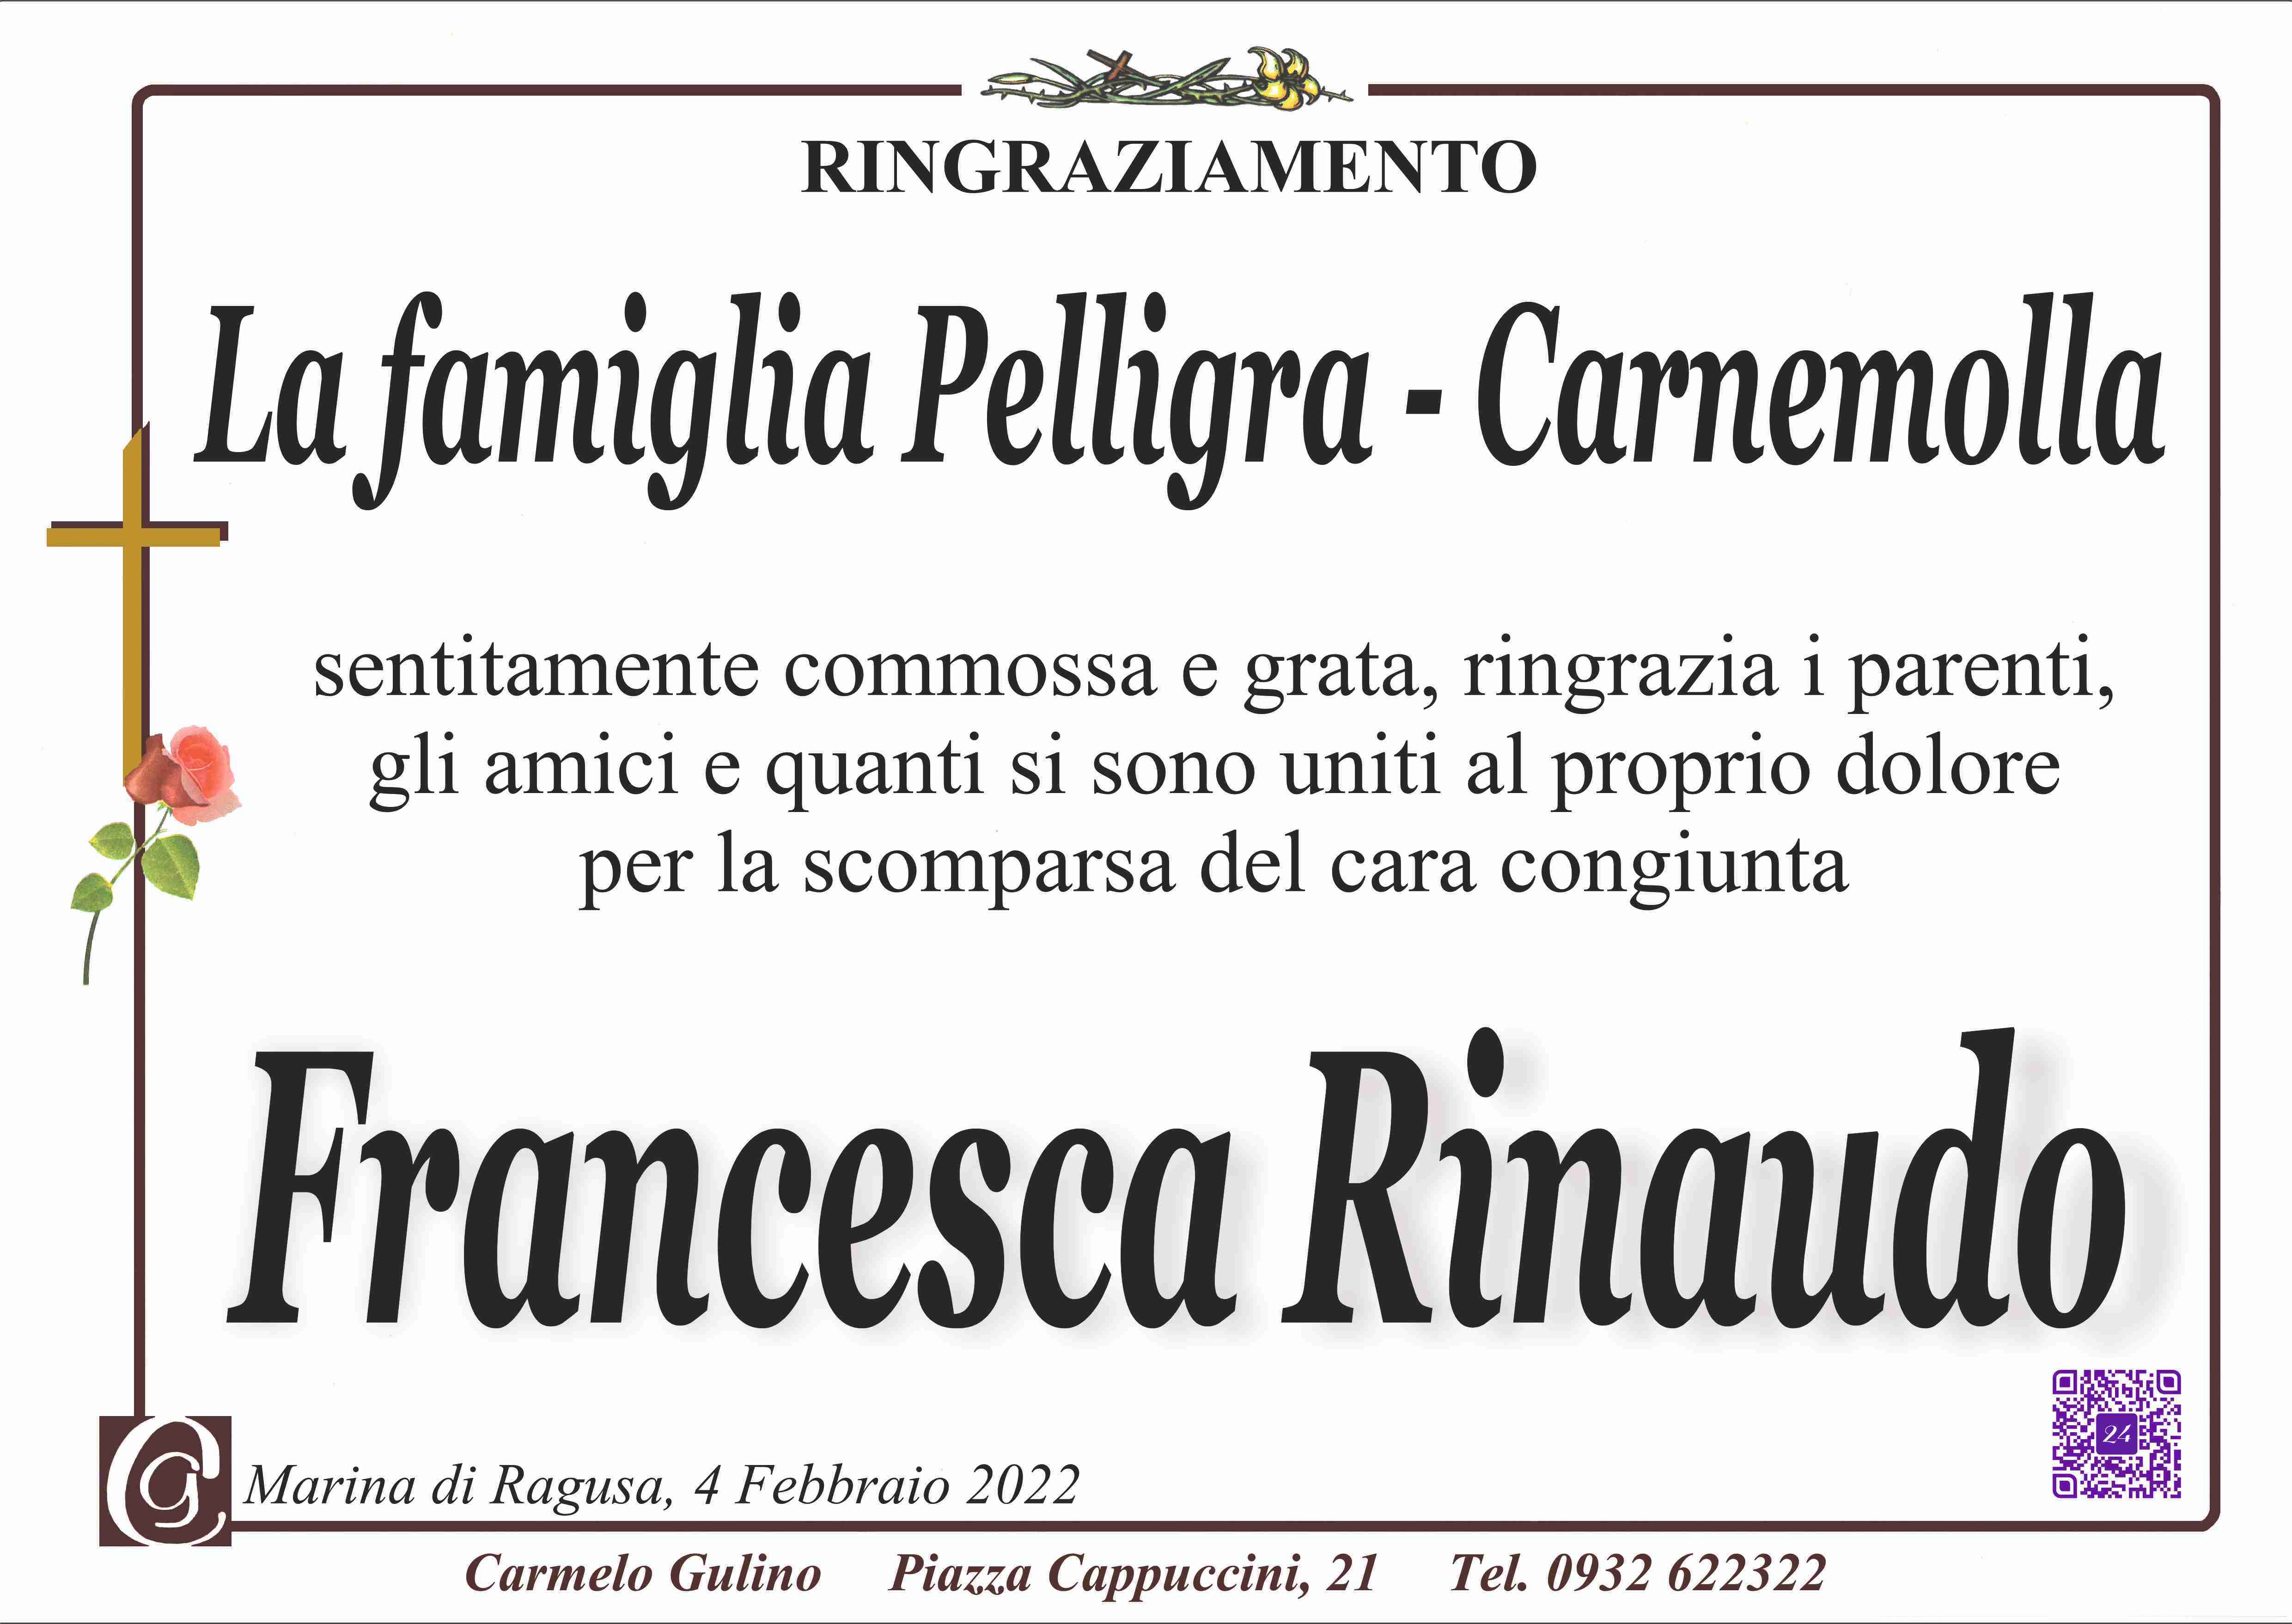 Francesca Rinaudo